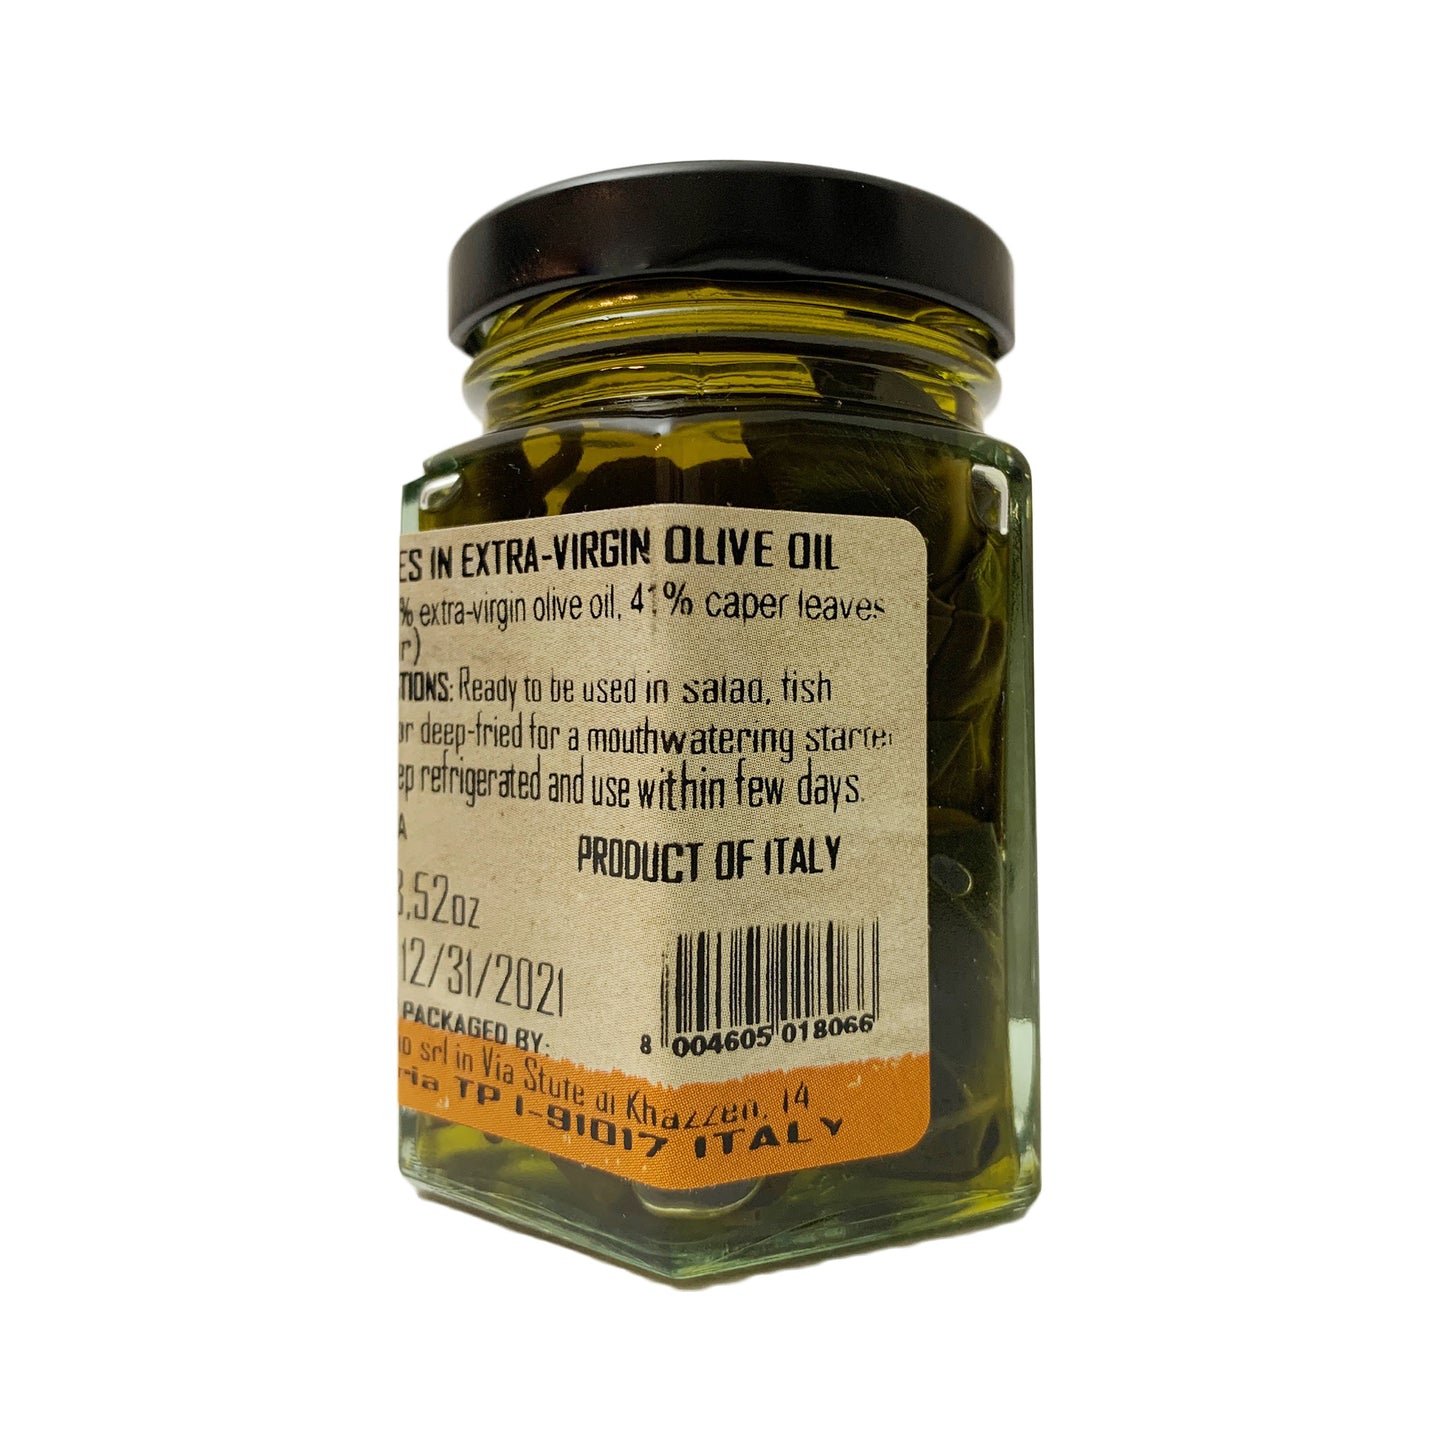 Etimo Pantelleria Caper Leaves in Extra Virgin Olive Oil 3.52 Ounces